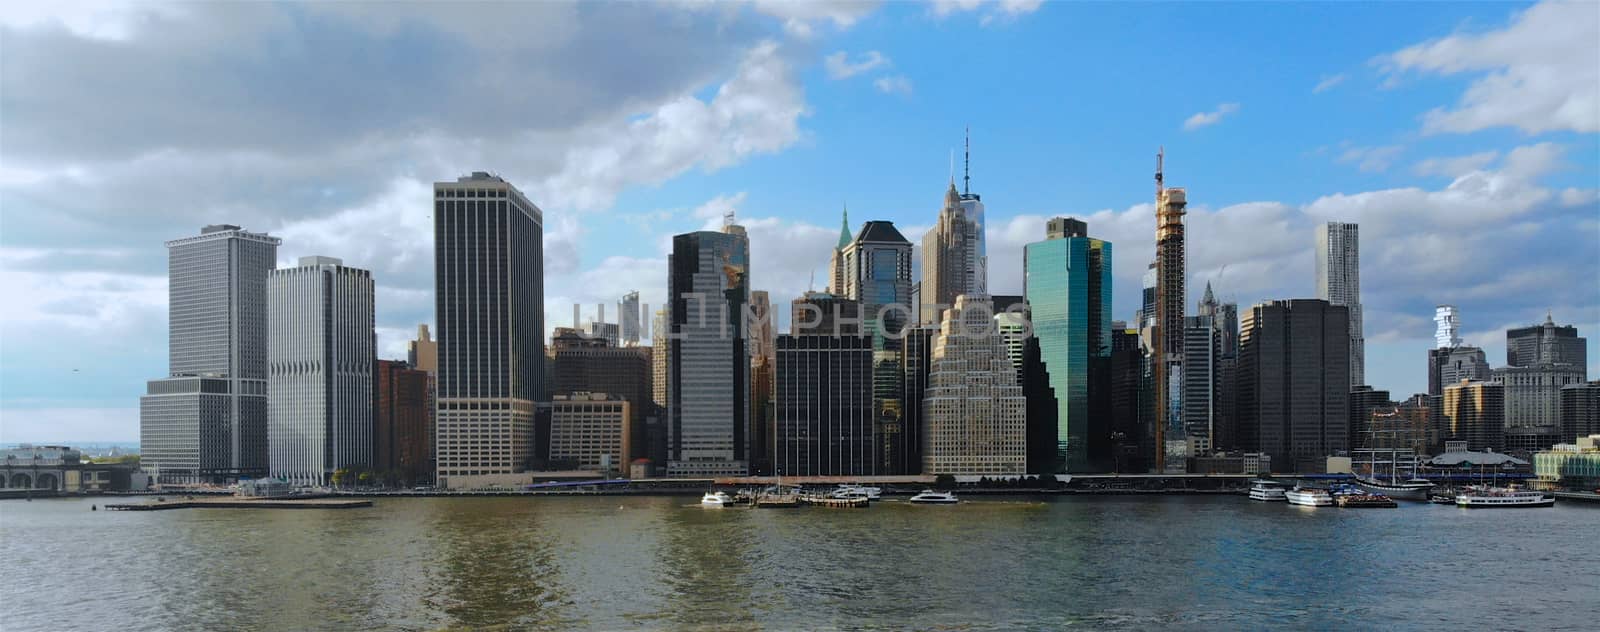 Manhattan Skyline, with Financial District and World Trade Center, New York, USA. by Bonandbon